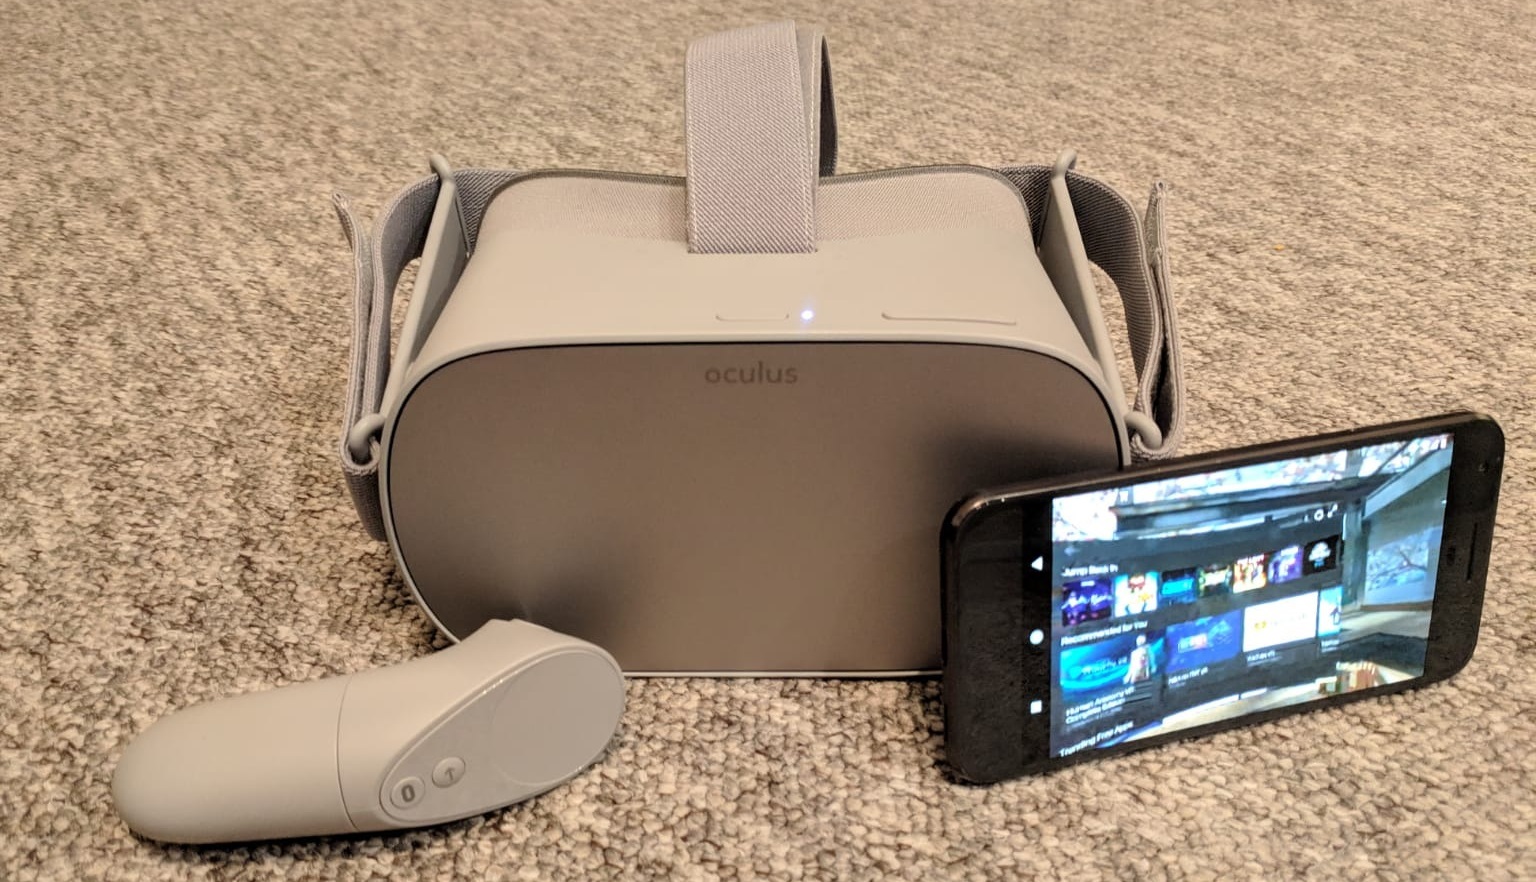 Oculus Go casting vr mobile standalone